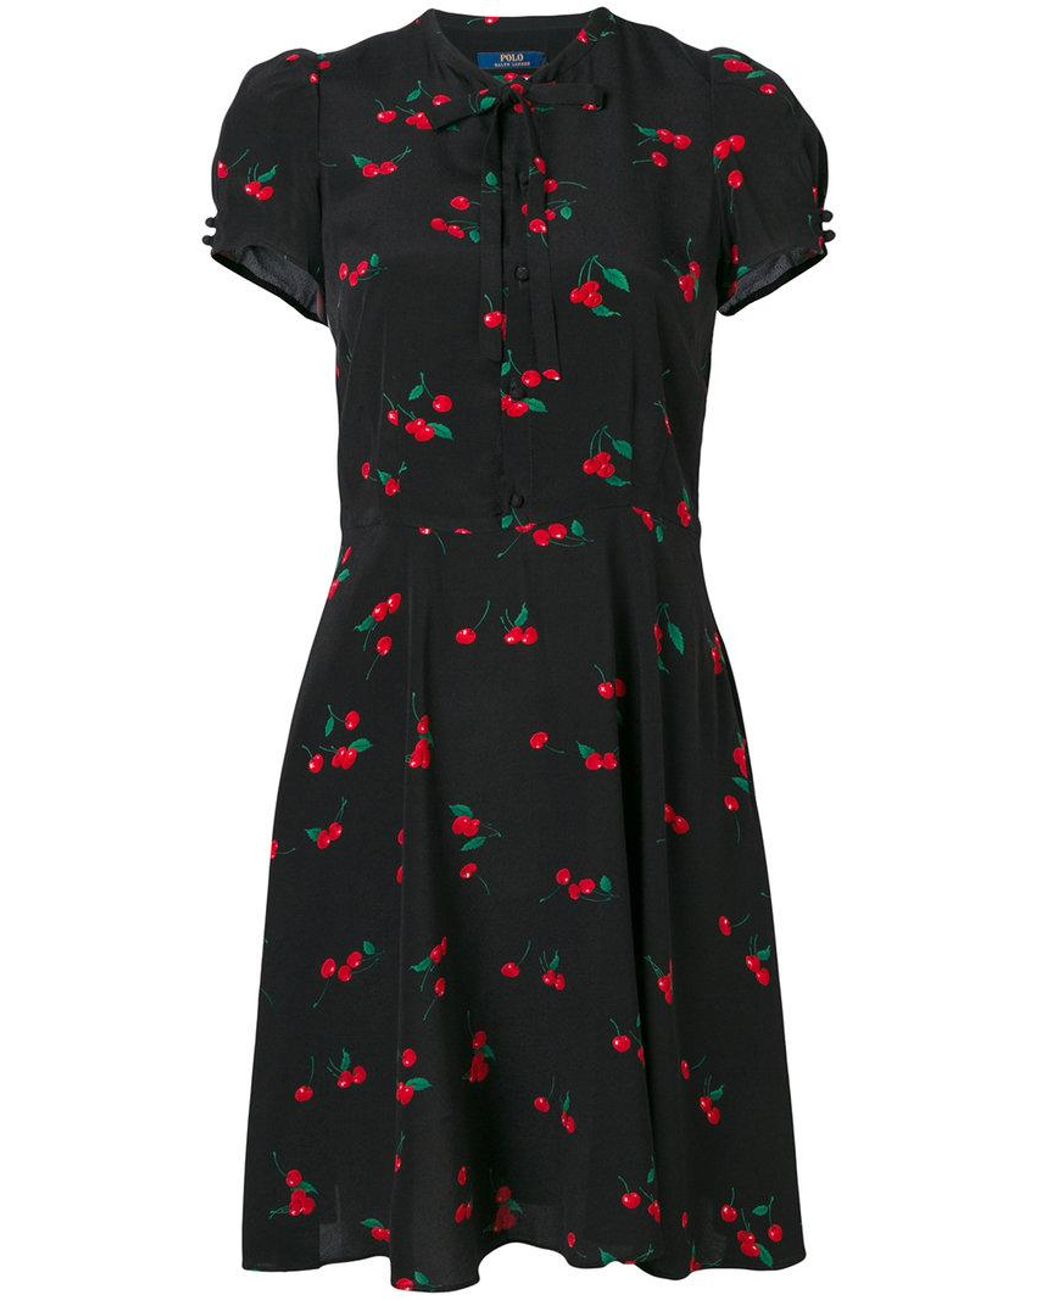 Polo Ralph Lauren Cherry Print Dress in Black | Lyst